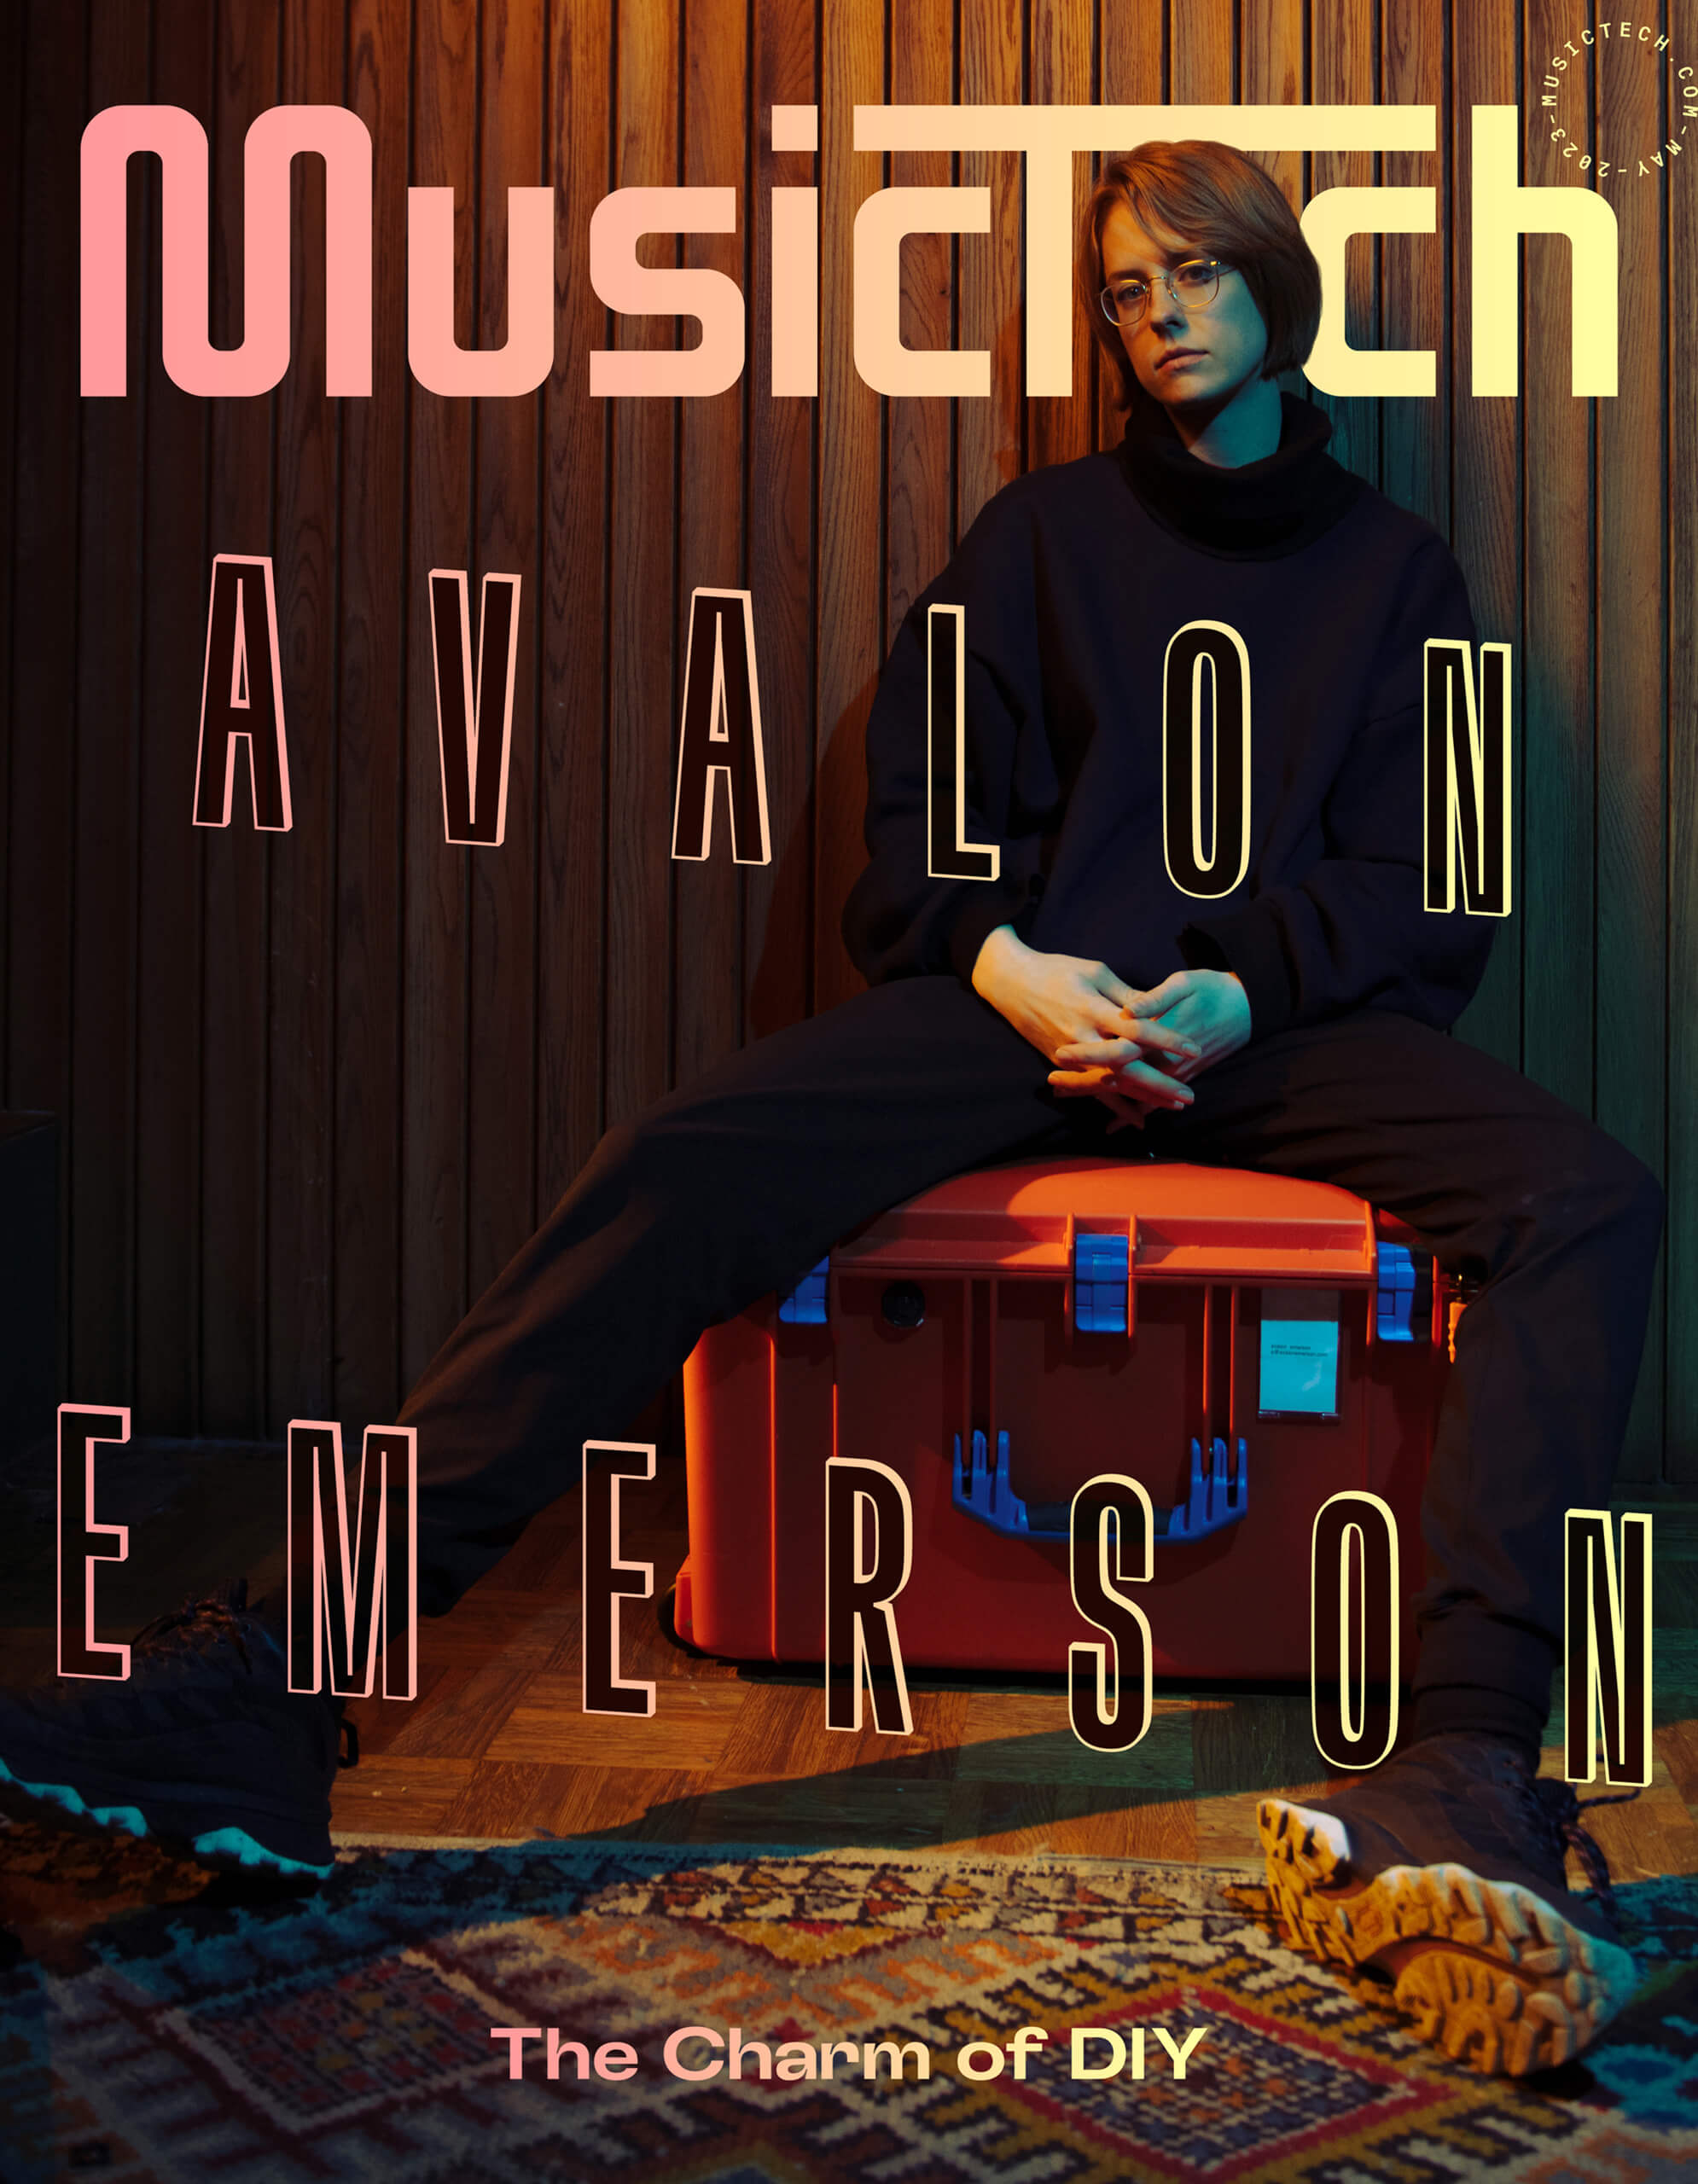 Avalon Emerson